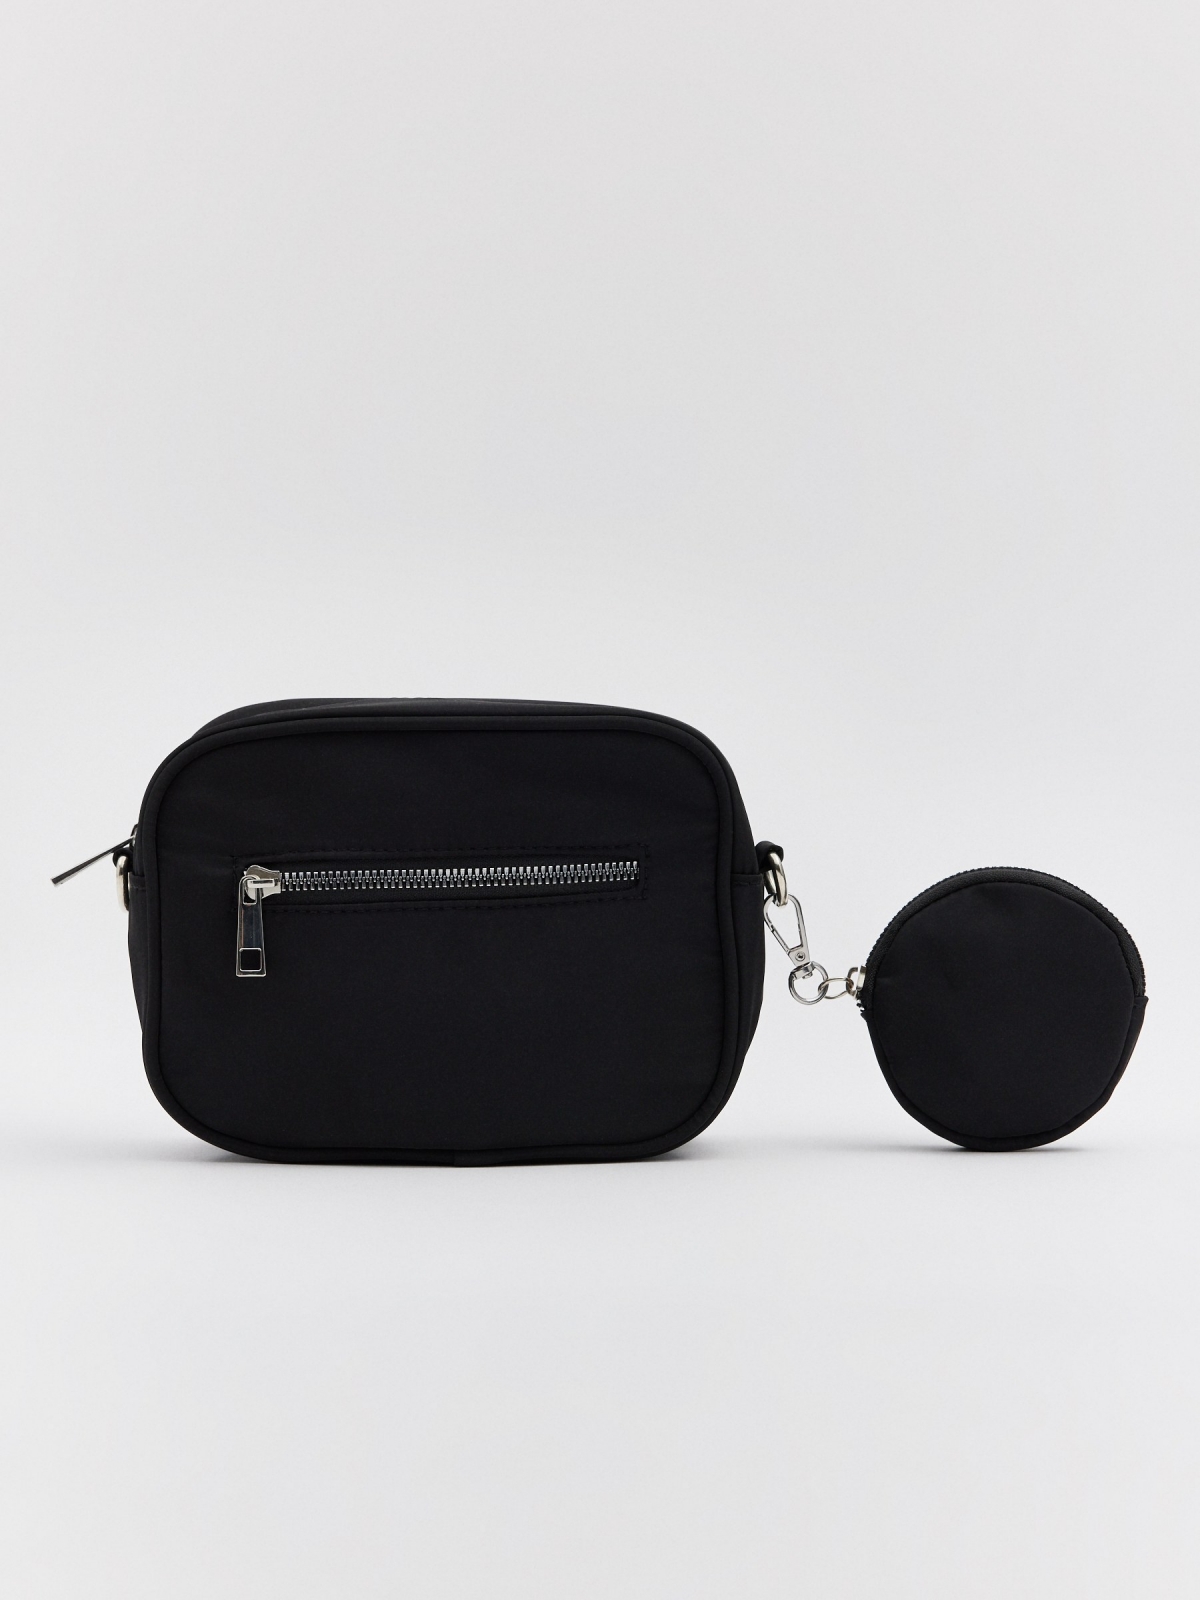 Nylon bag with purse black